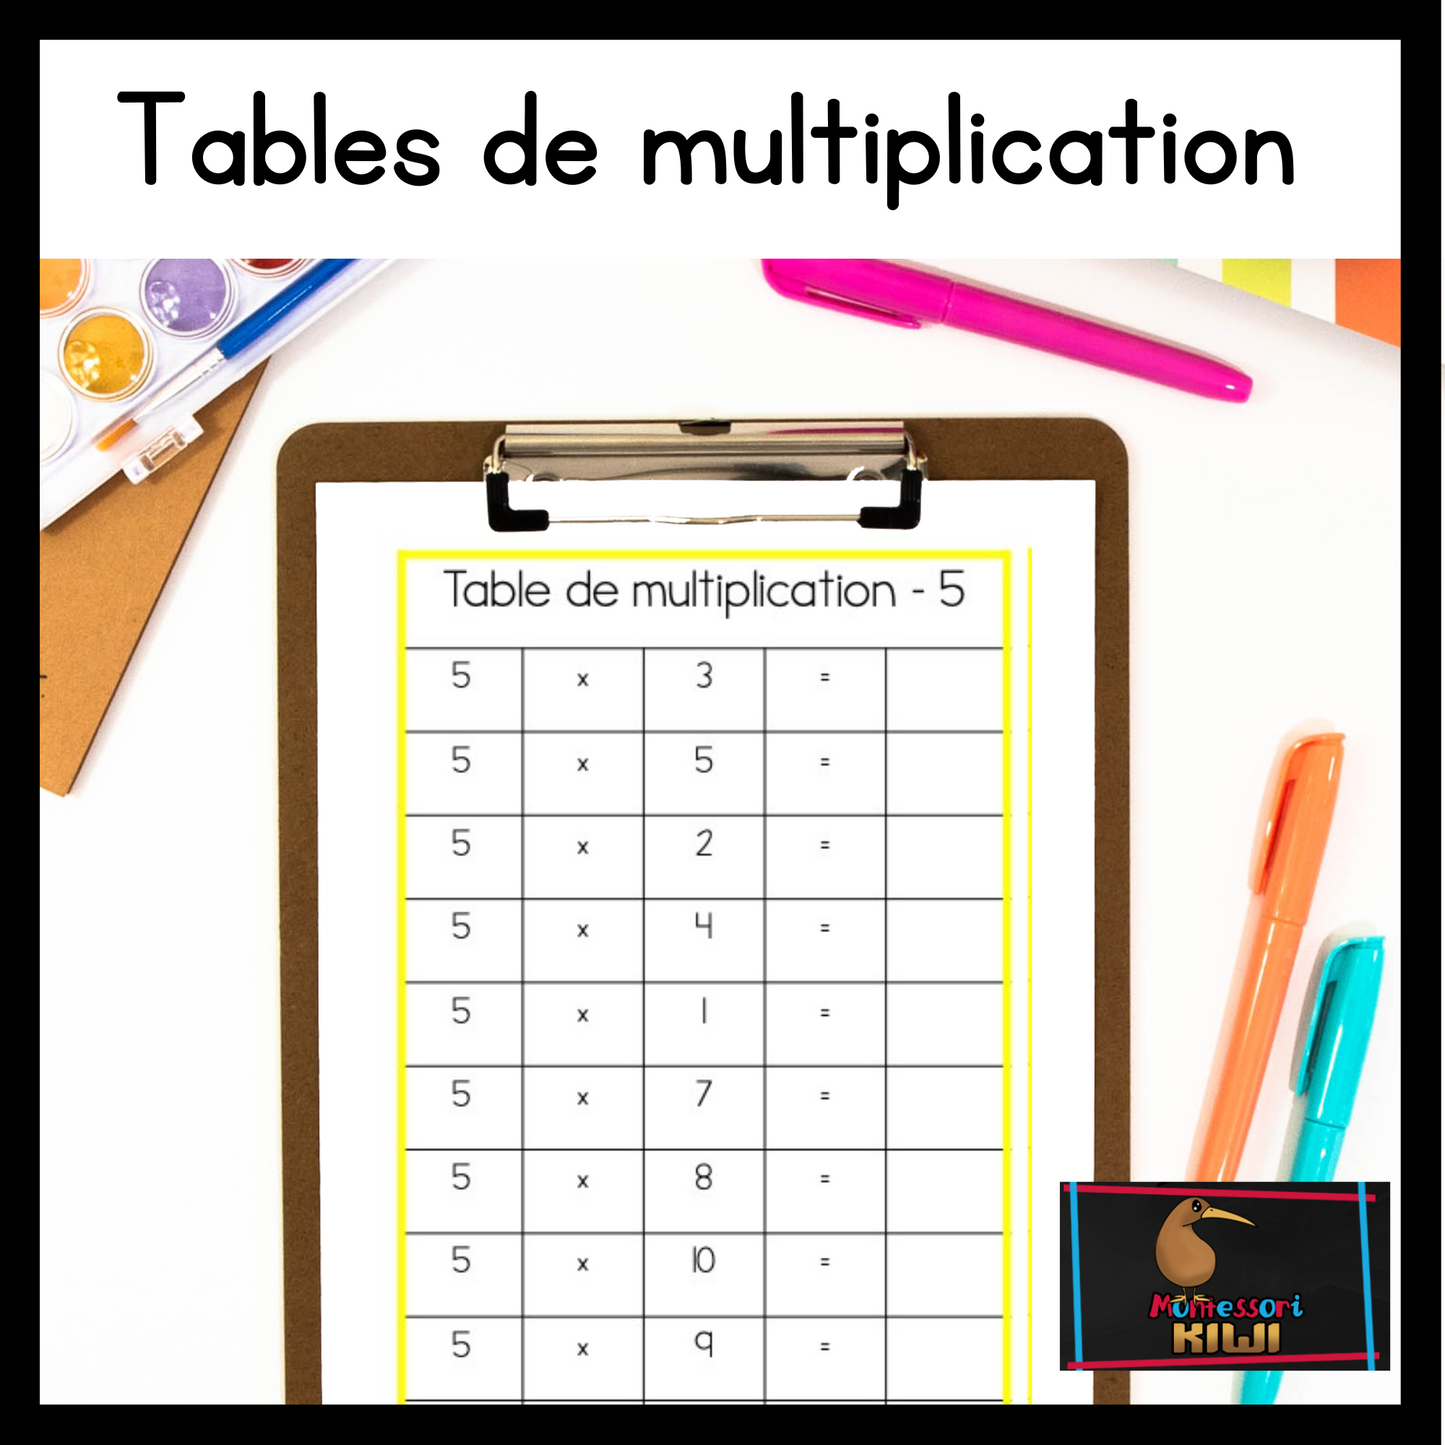 Tableaux de multiplication (Multiplication Tables French) - montessorikiwi